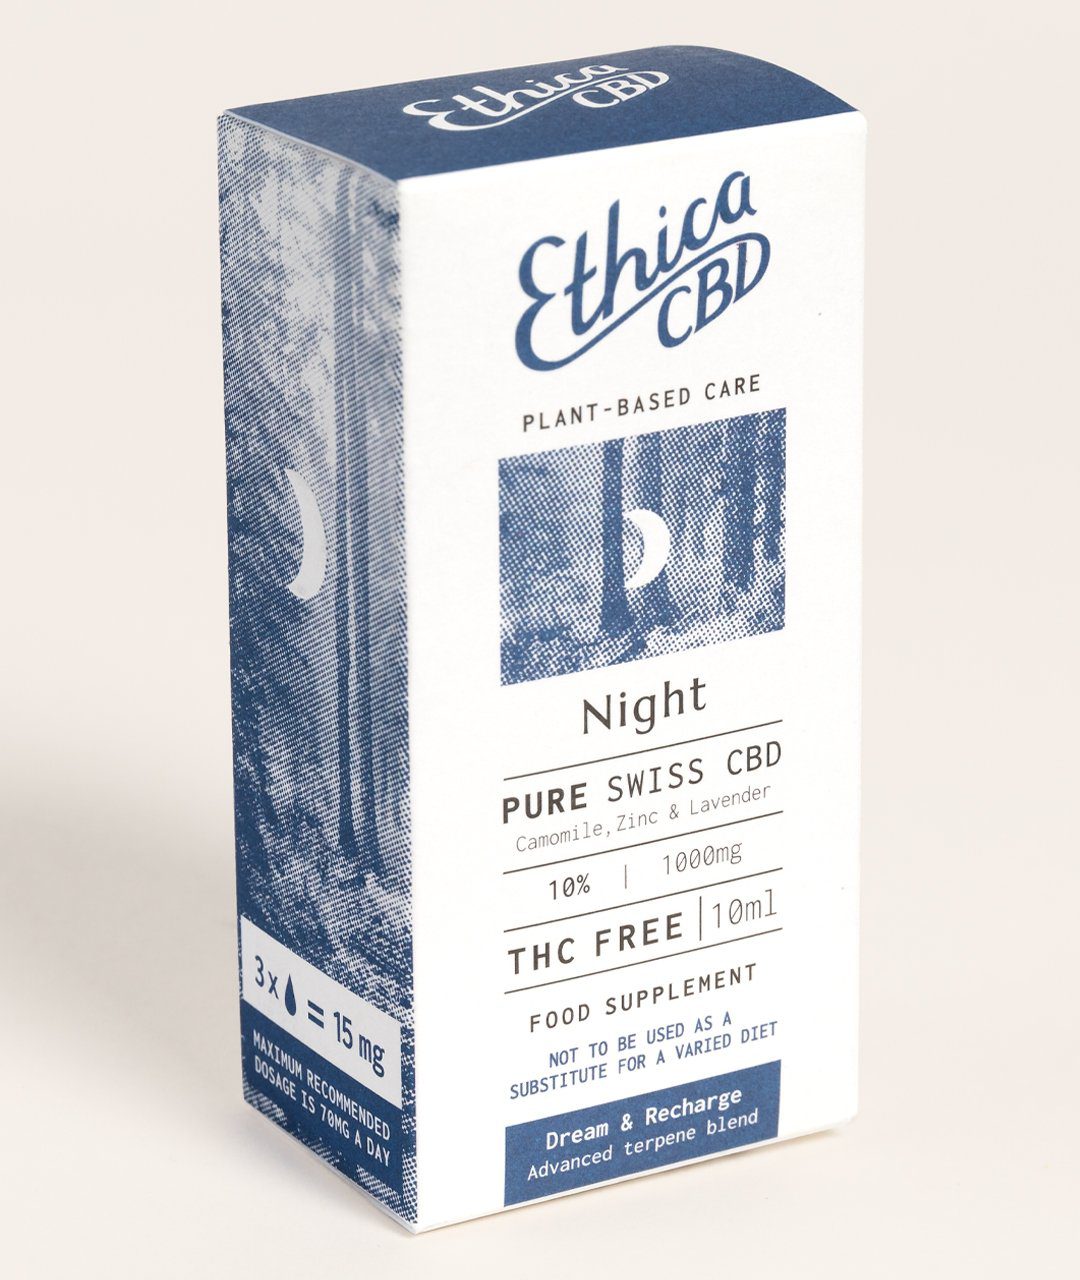 EthicaCBD Pure CBD Night box design by Kingdom and Sparrow